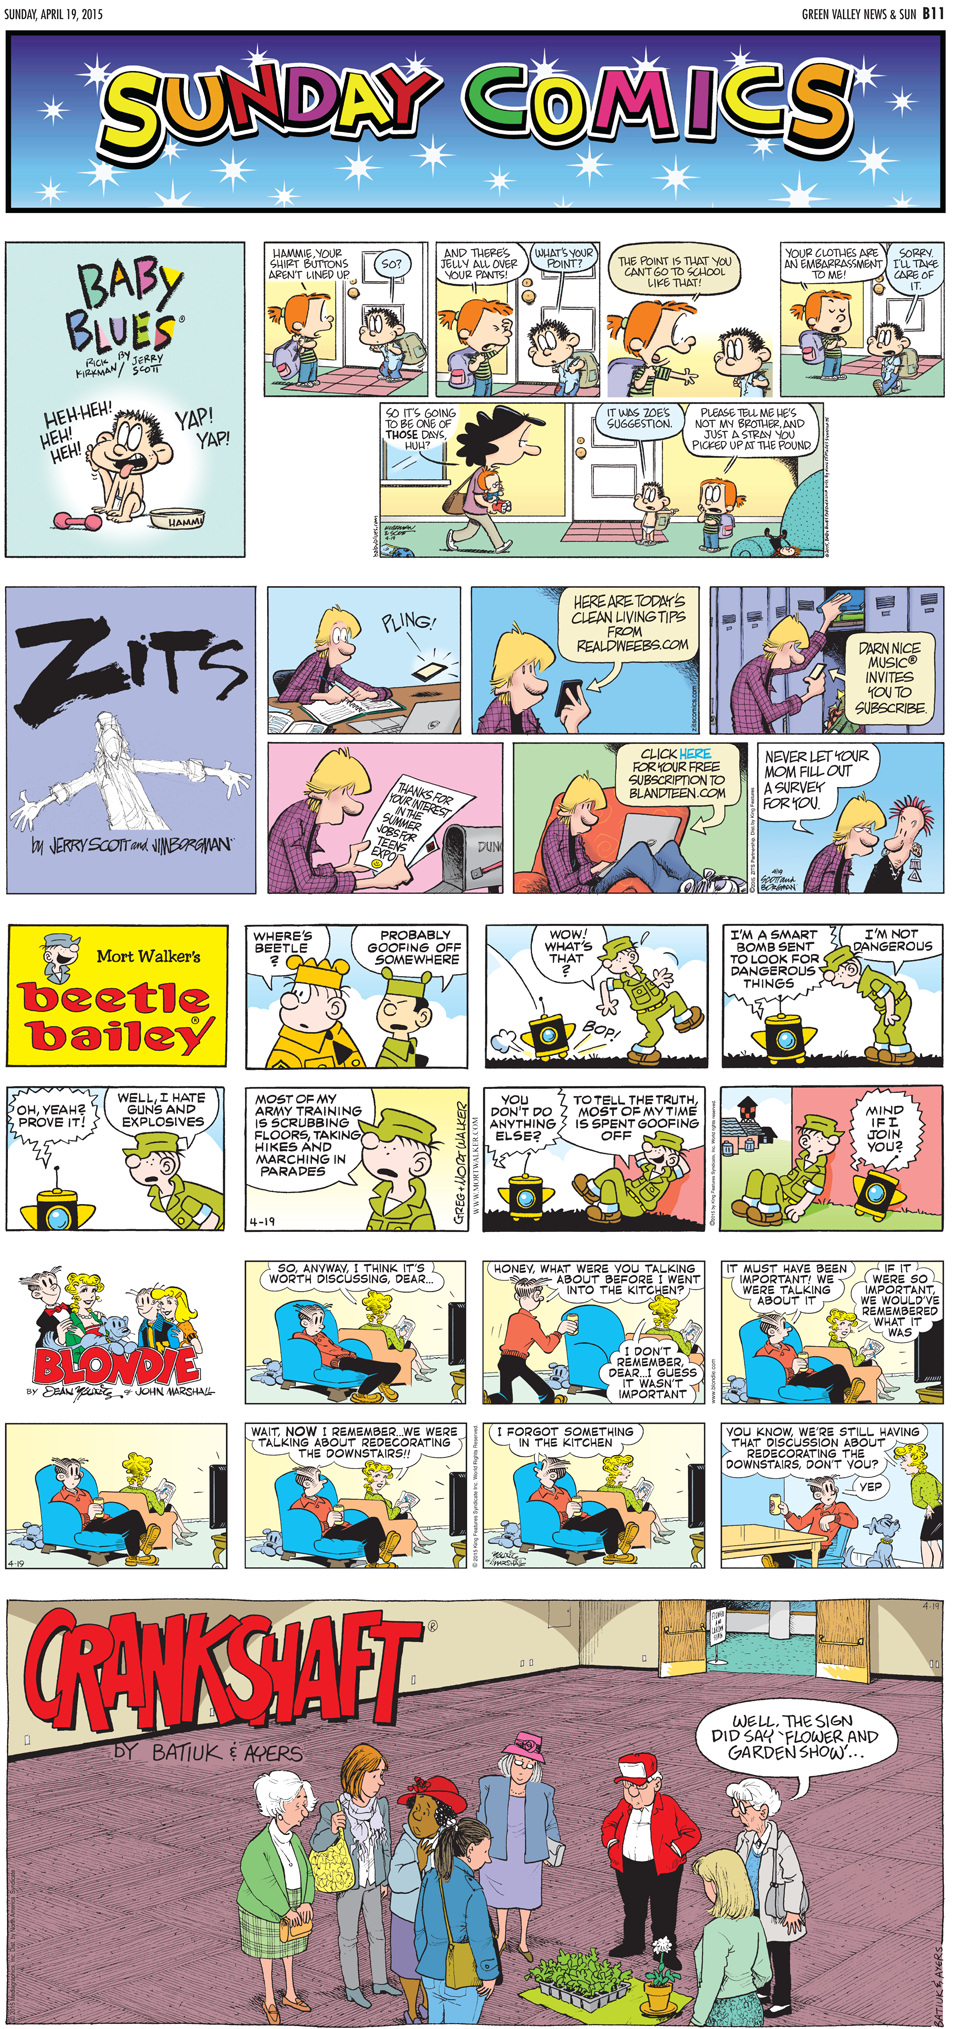 March 22, 2015: Sunday Comics, Part 1 - Green Valley News: Cartoons